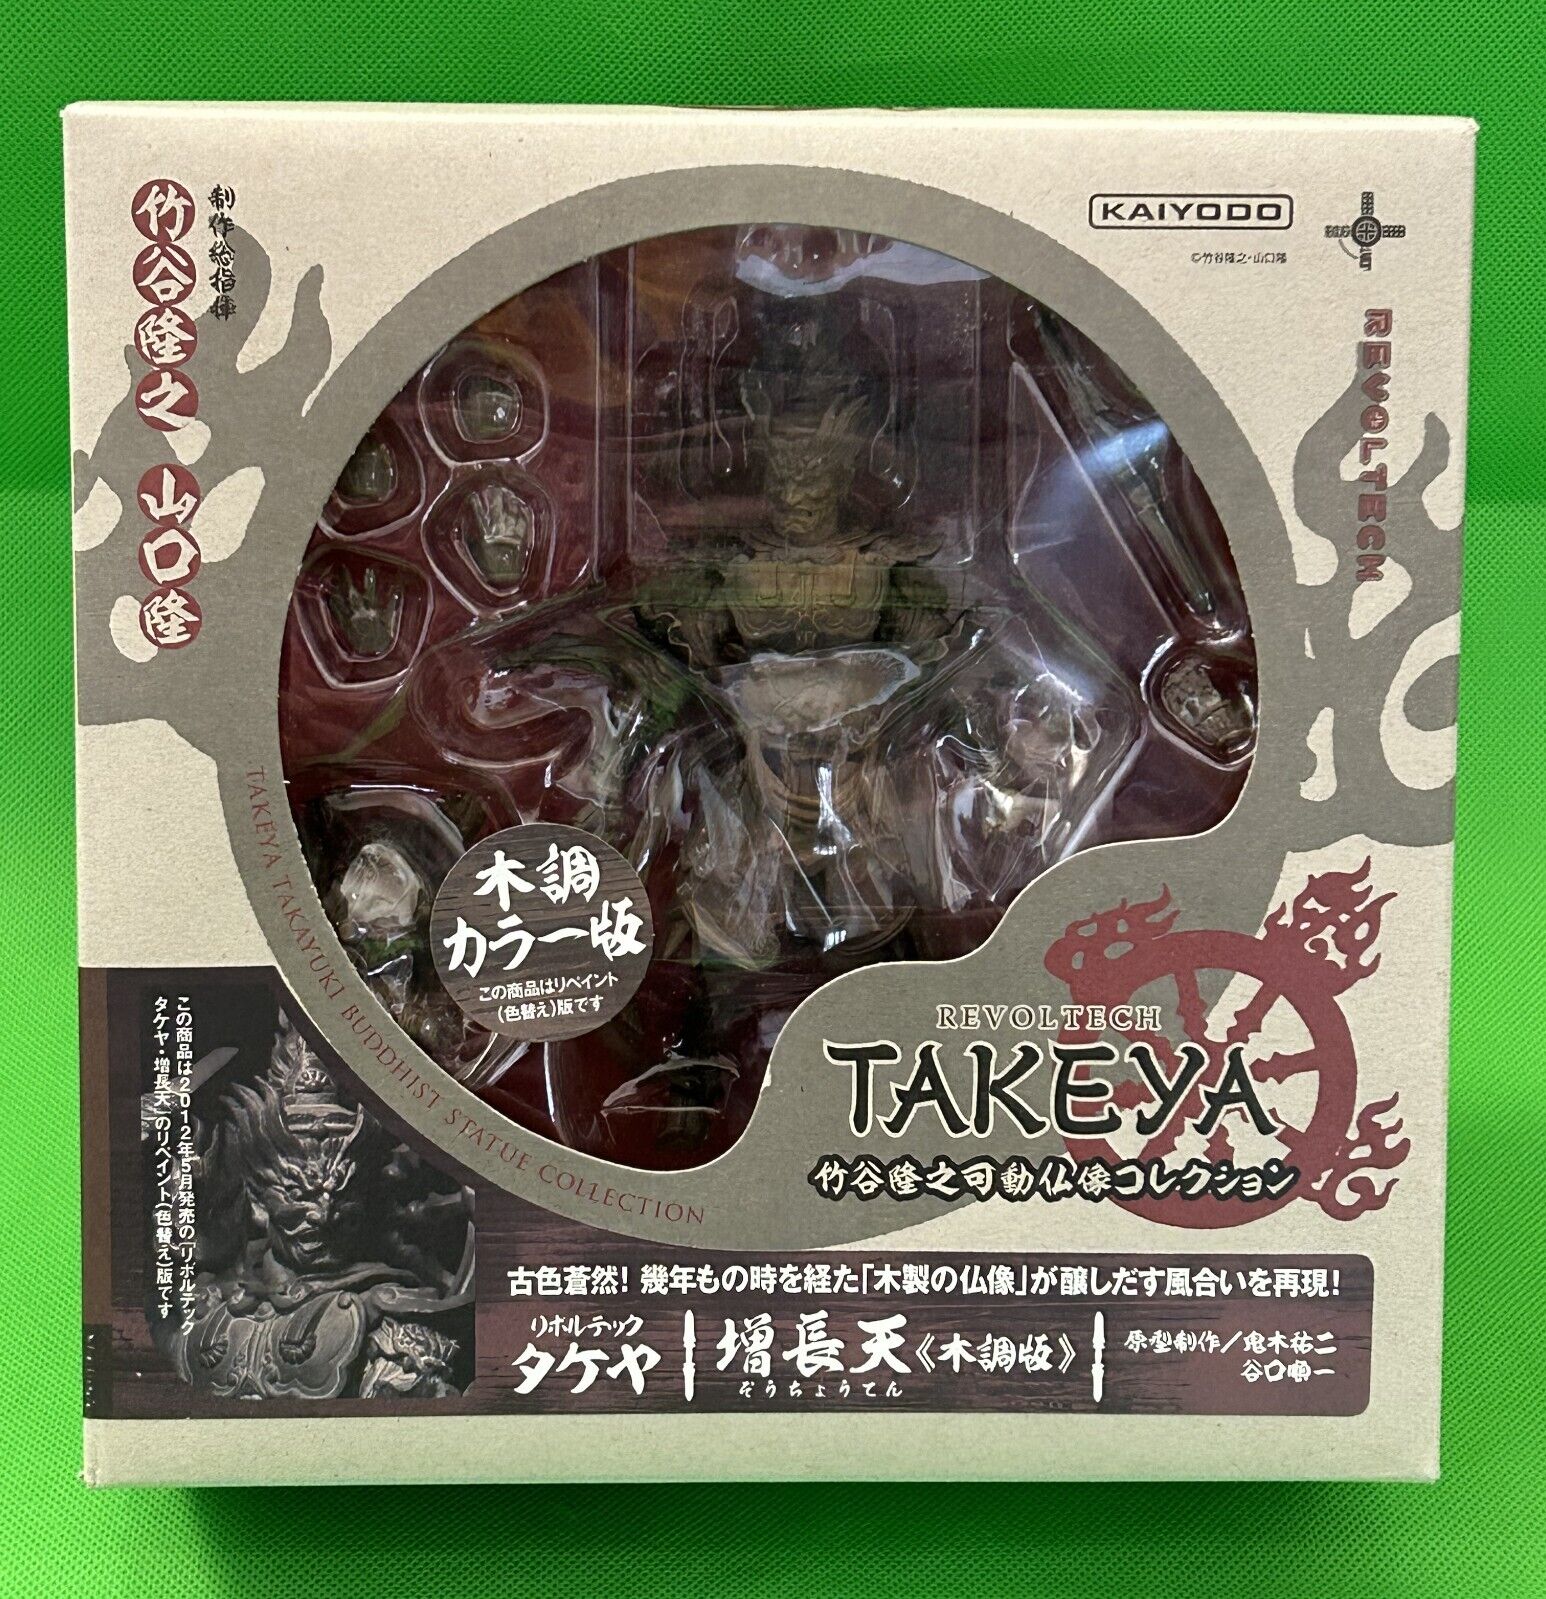 Kaiyodo Takeya Revoltech #004 - Zochouten Figure (Wood Toned Version) - New